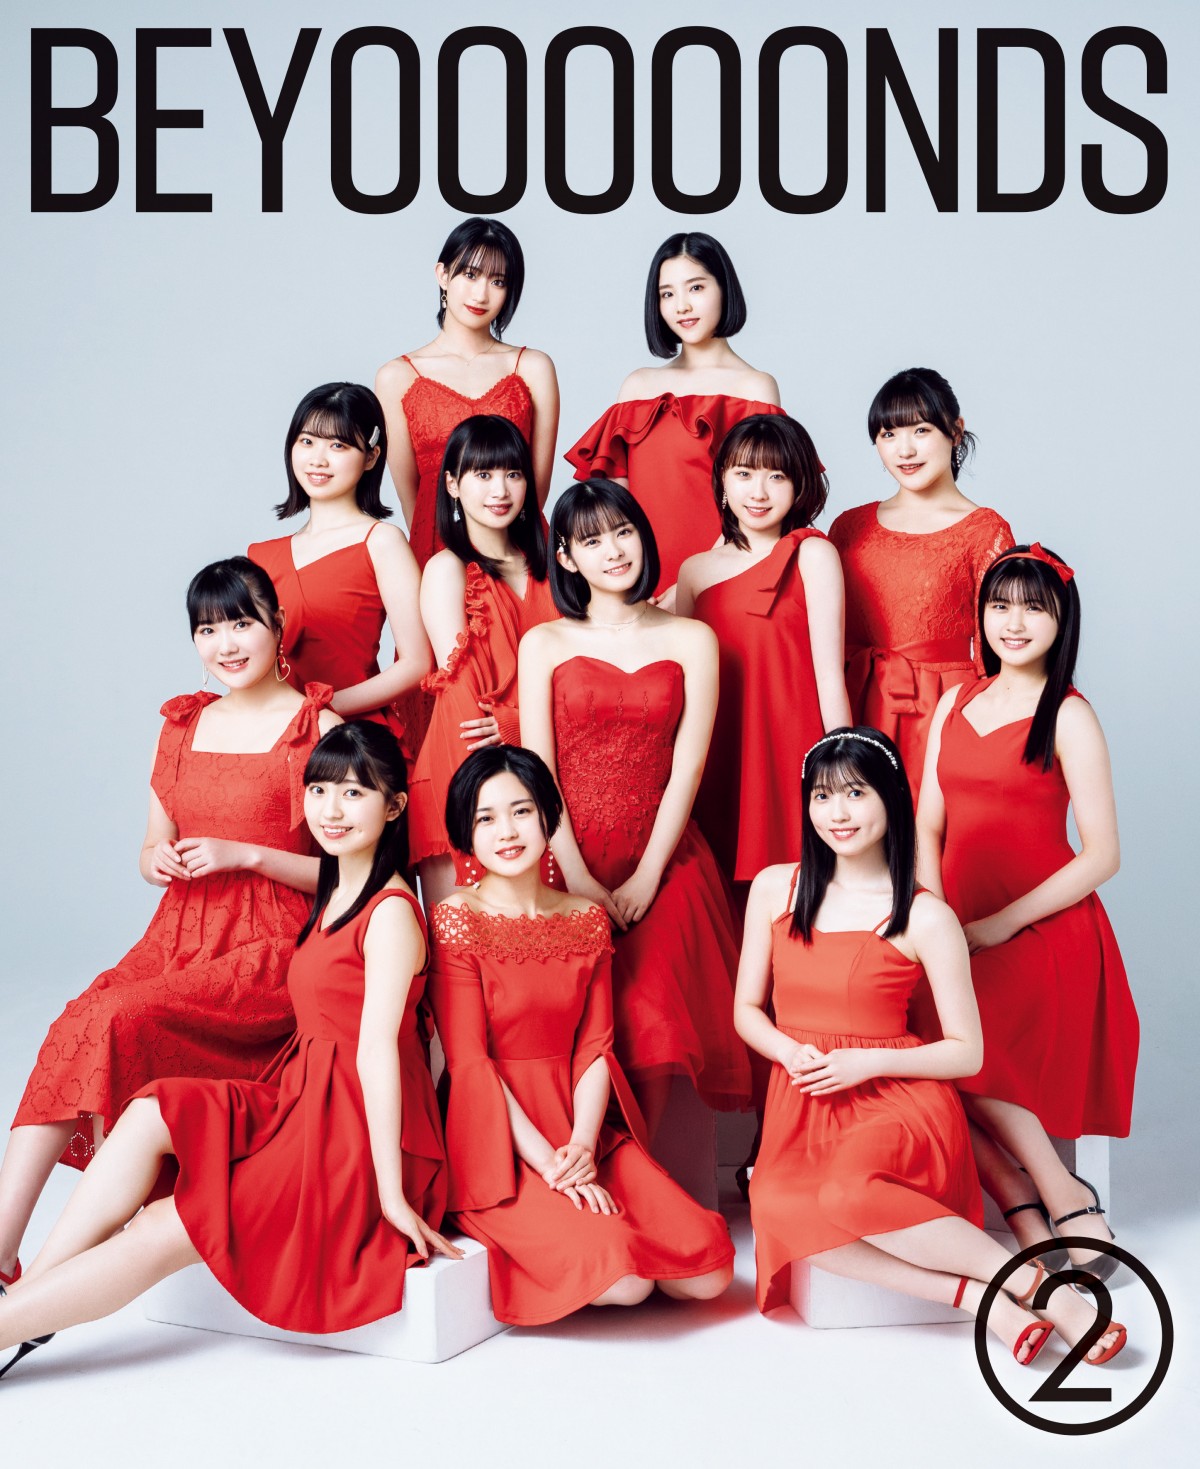 BEYOOOOONDS、デビュー2周年記念日に2冊目のオフィシャルブック発売